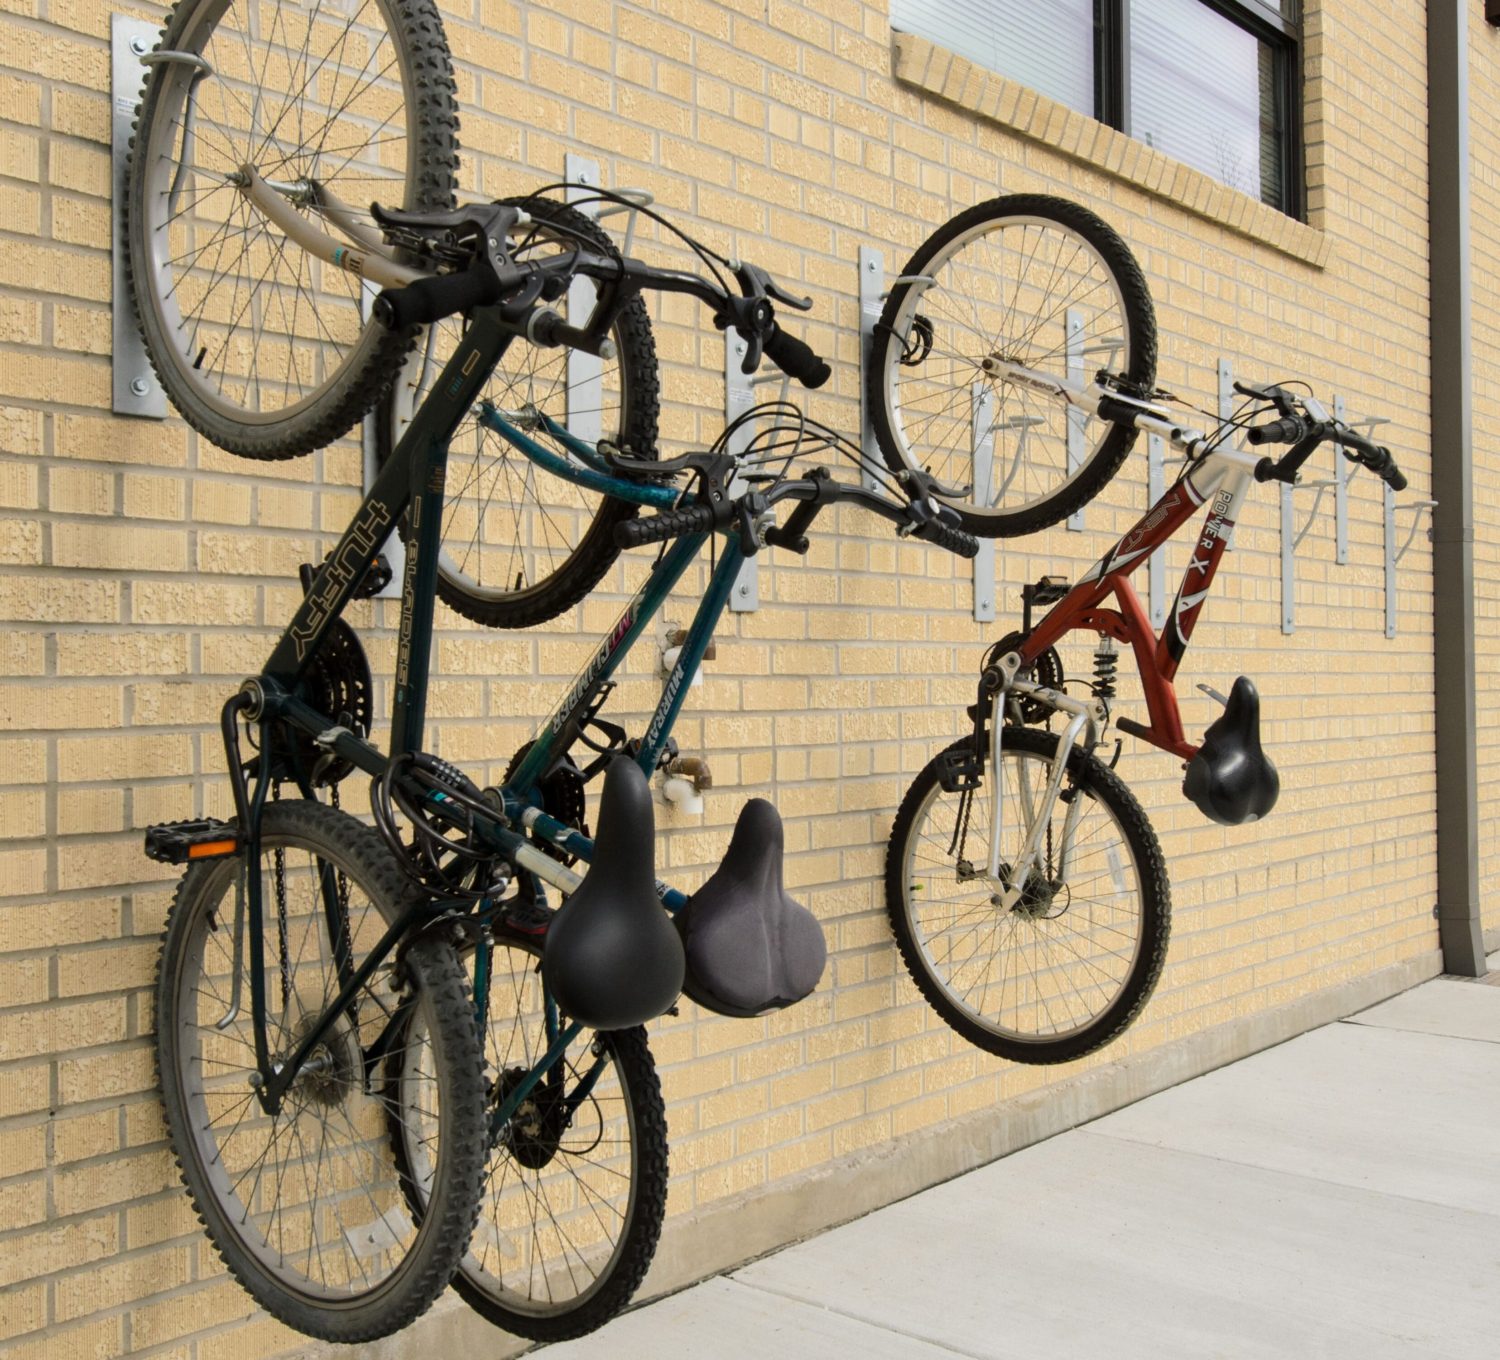 Bicycle Rack